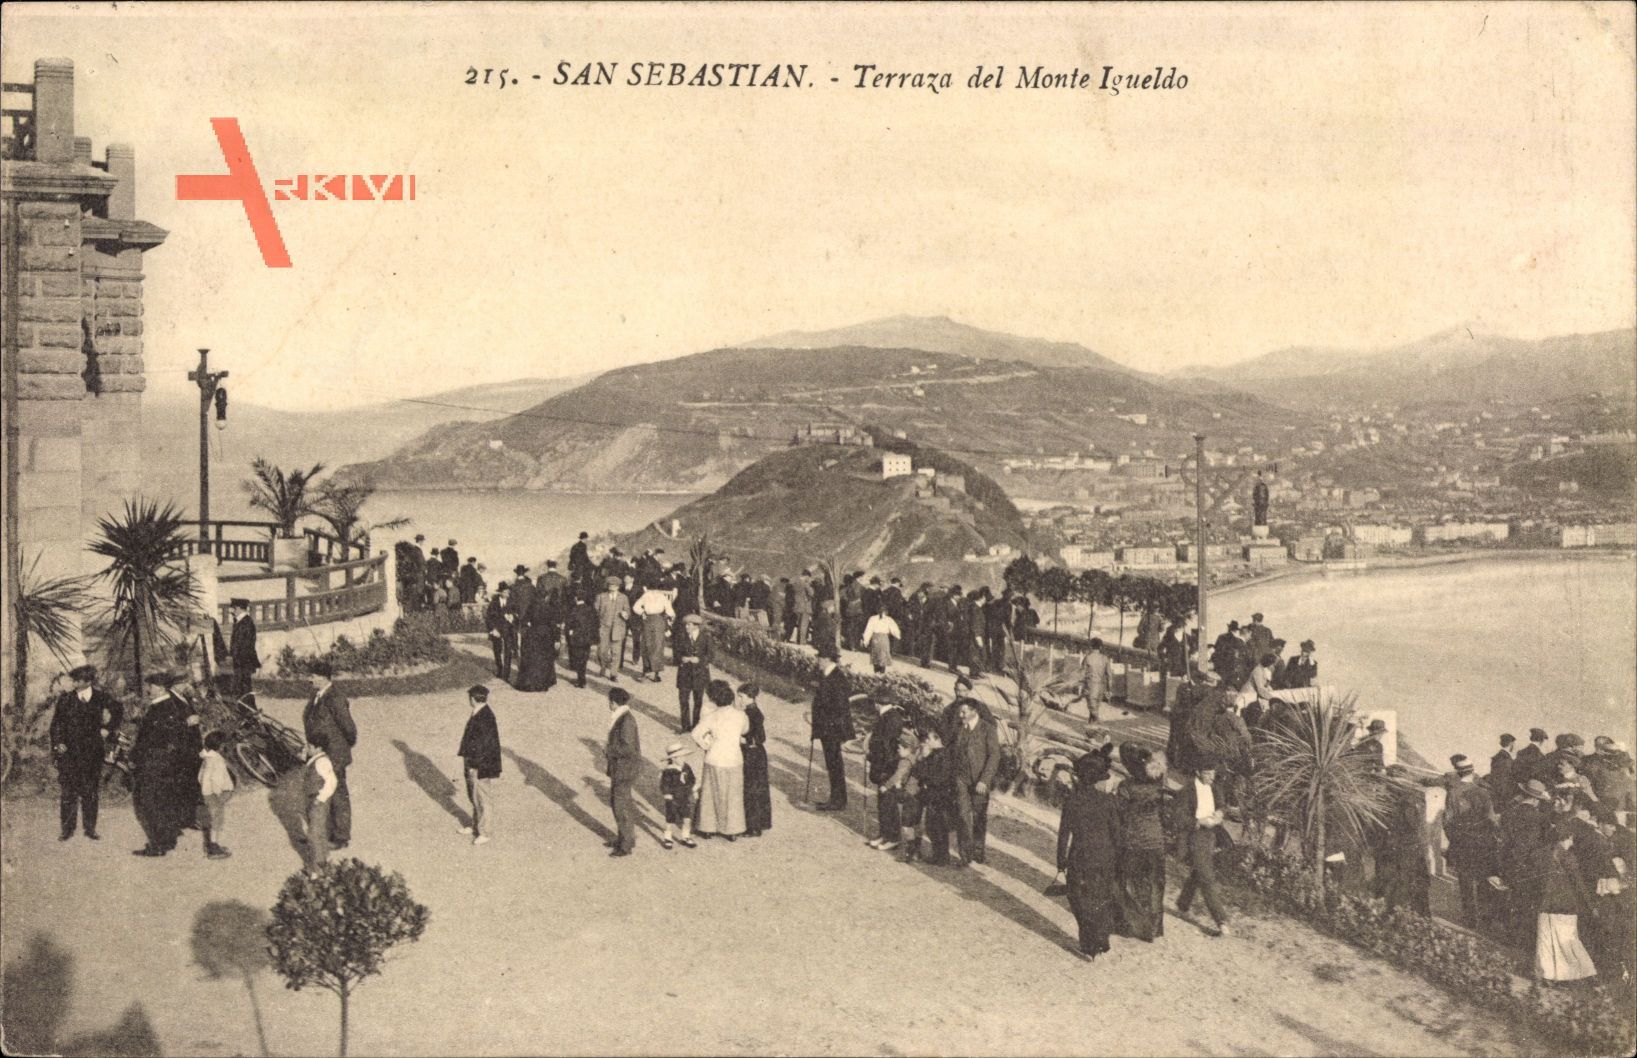 Donostia San Sebastián Baskenland, Terraza del Monte Igueldo